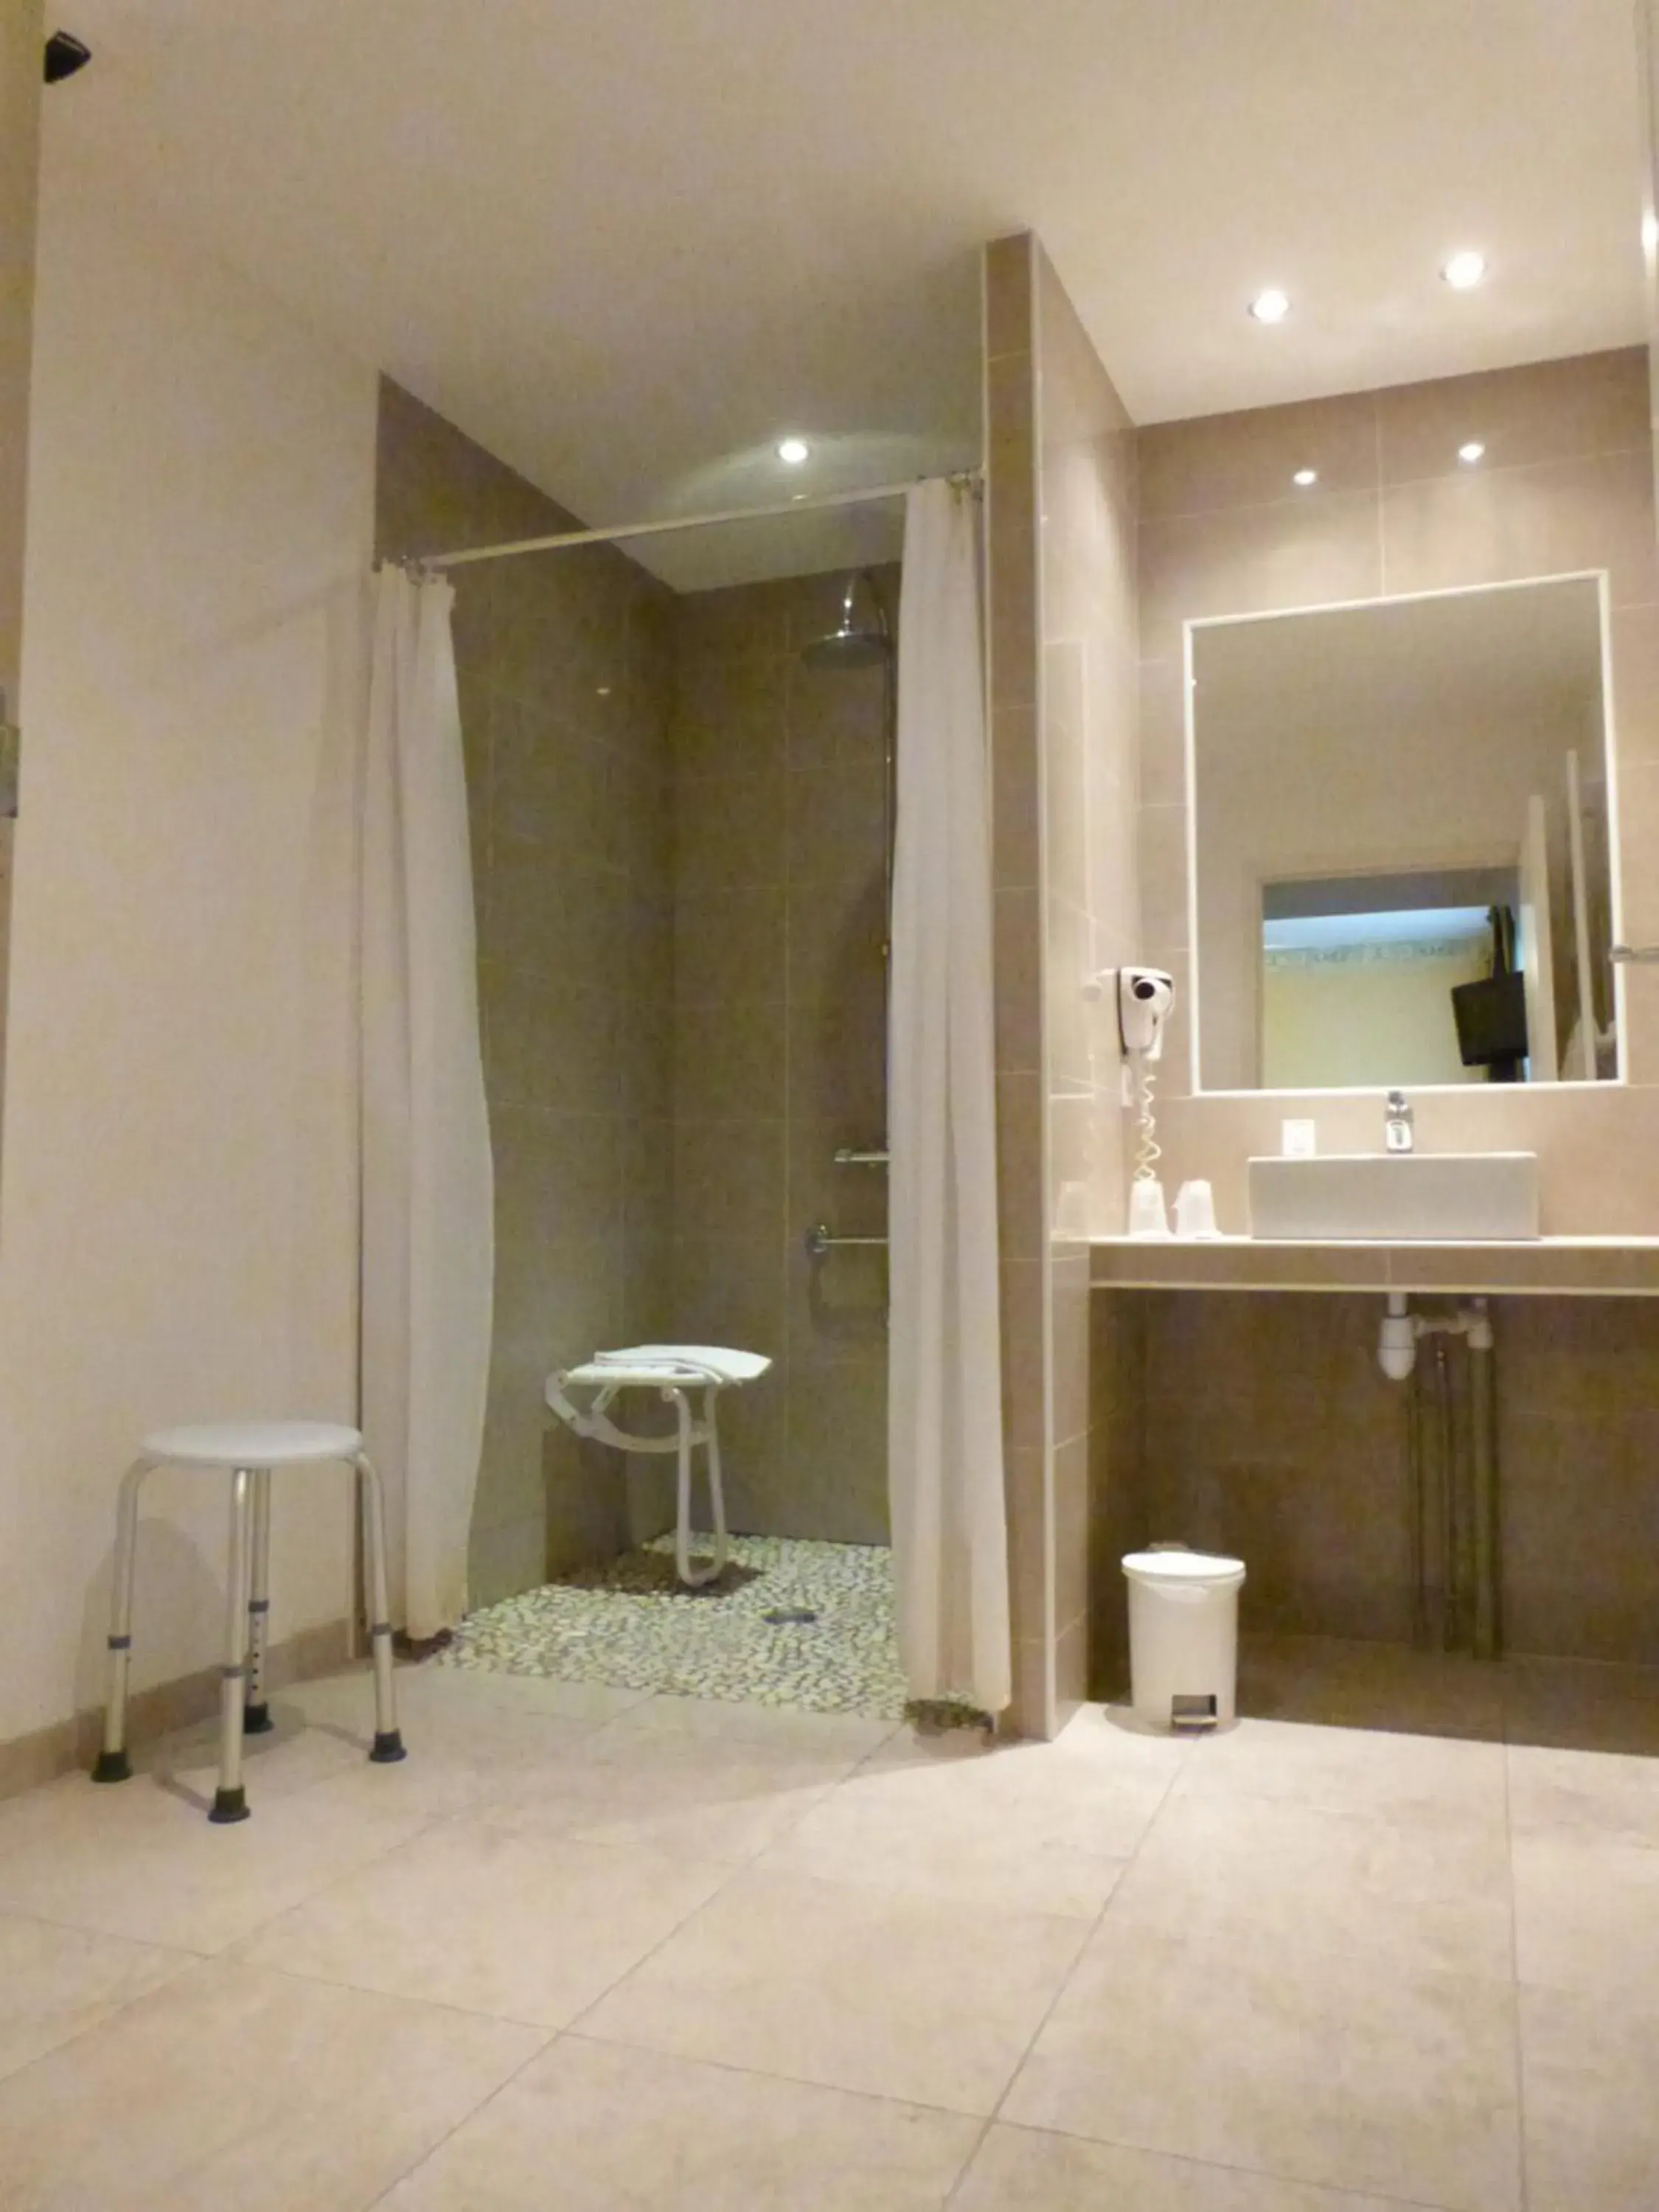 Facility for disabled guests, Bathroom in Logis Hôtel des Châteaux